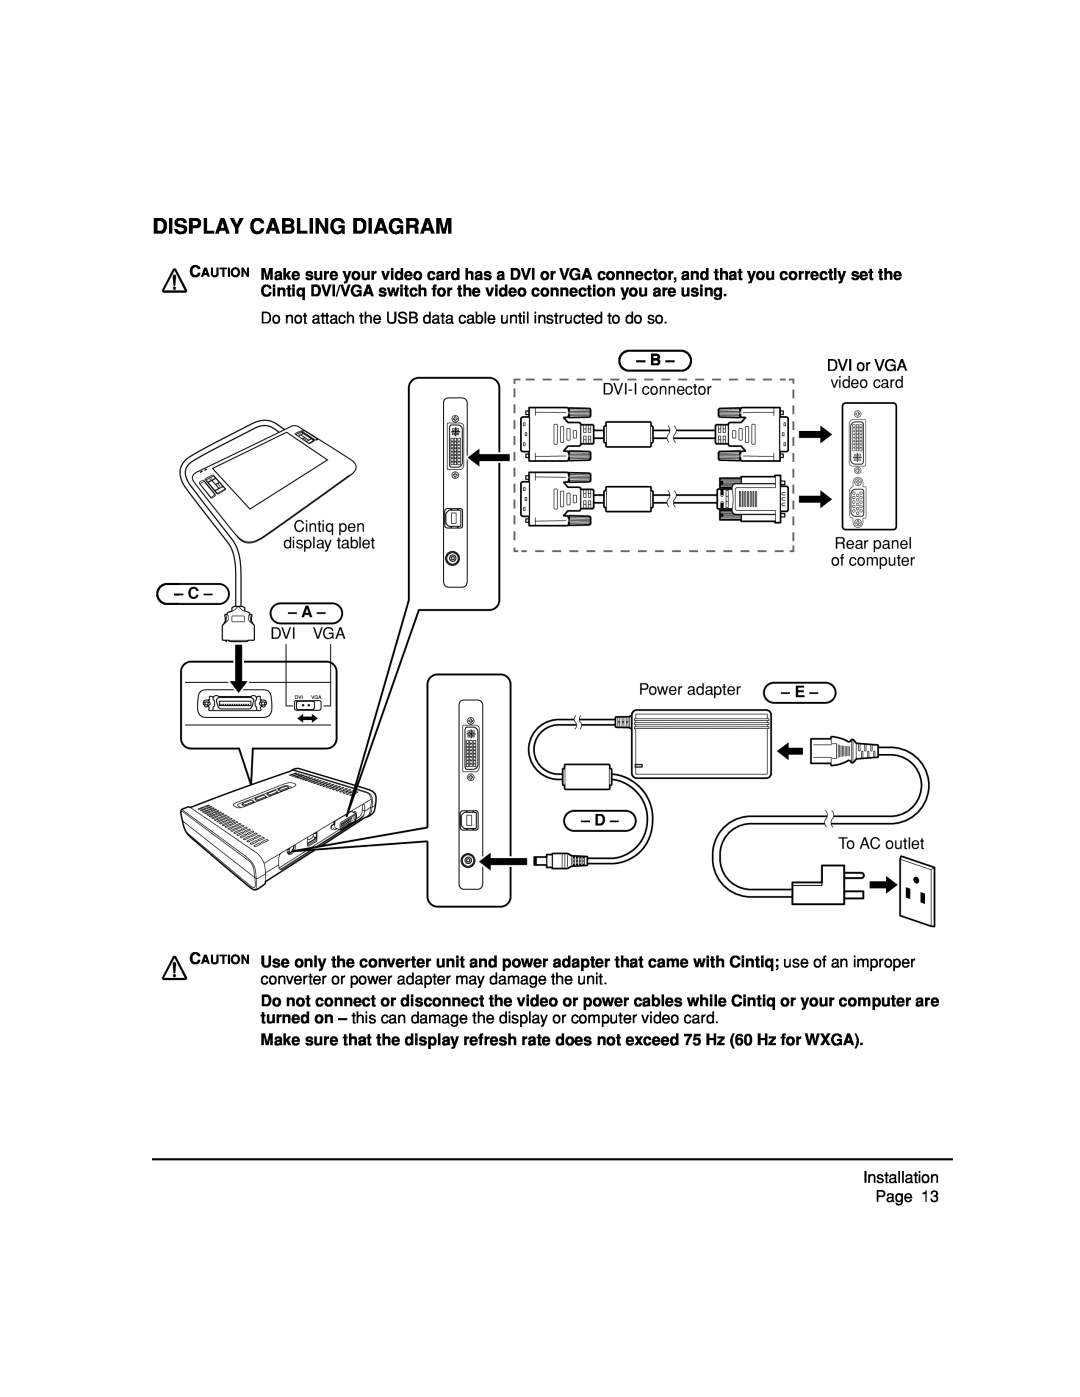 Wacom DTZ-1200W, 12WX manual Display Cabling Diagram 